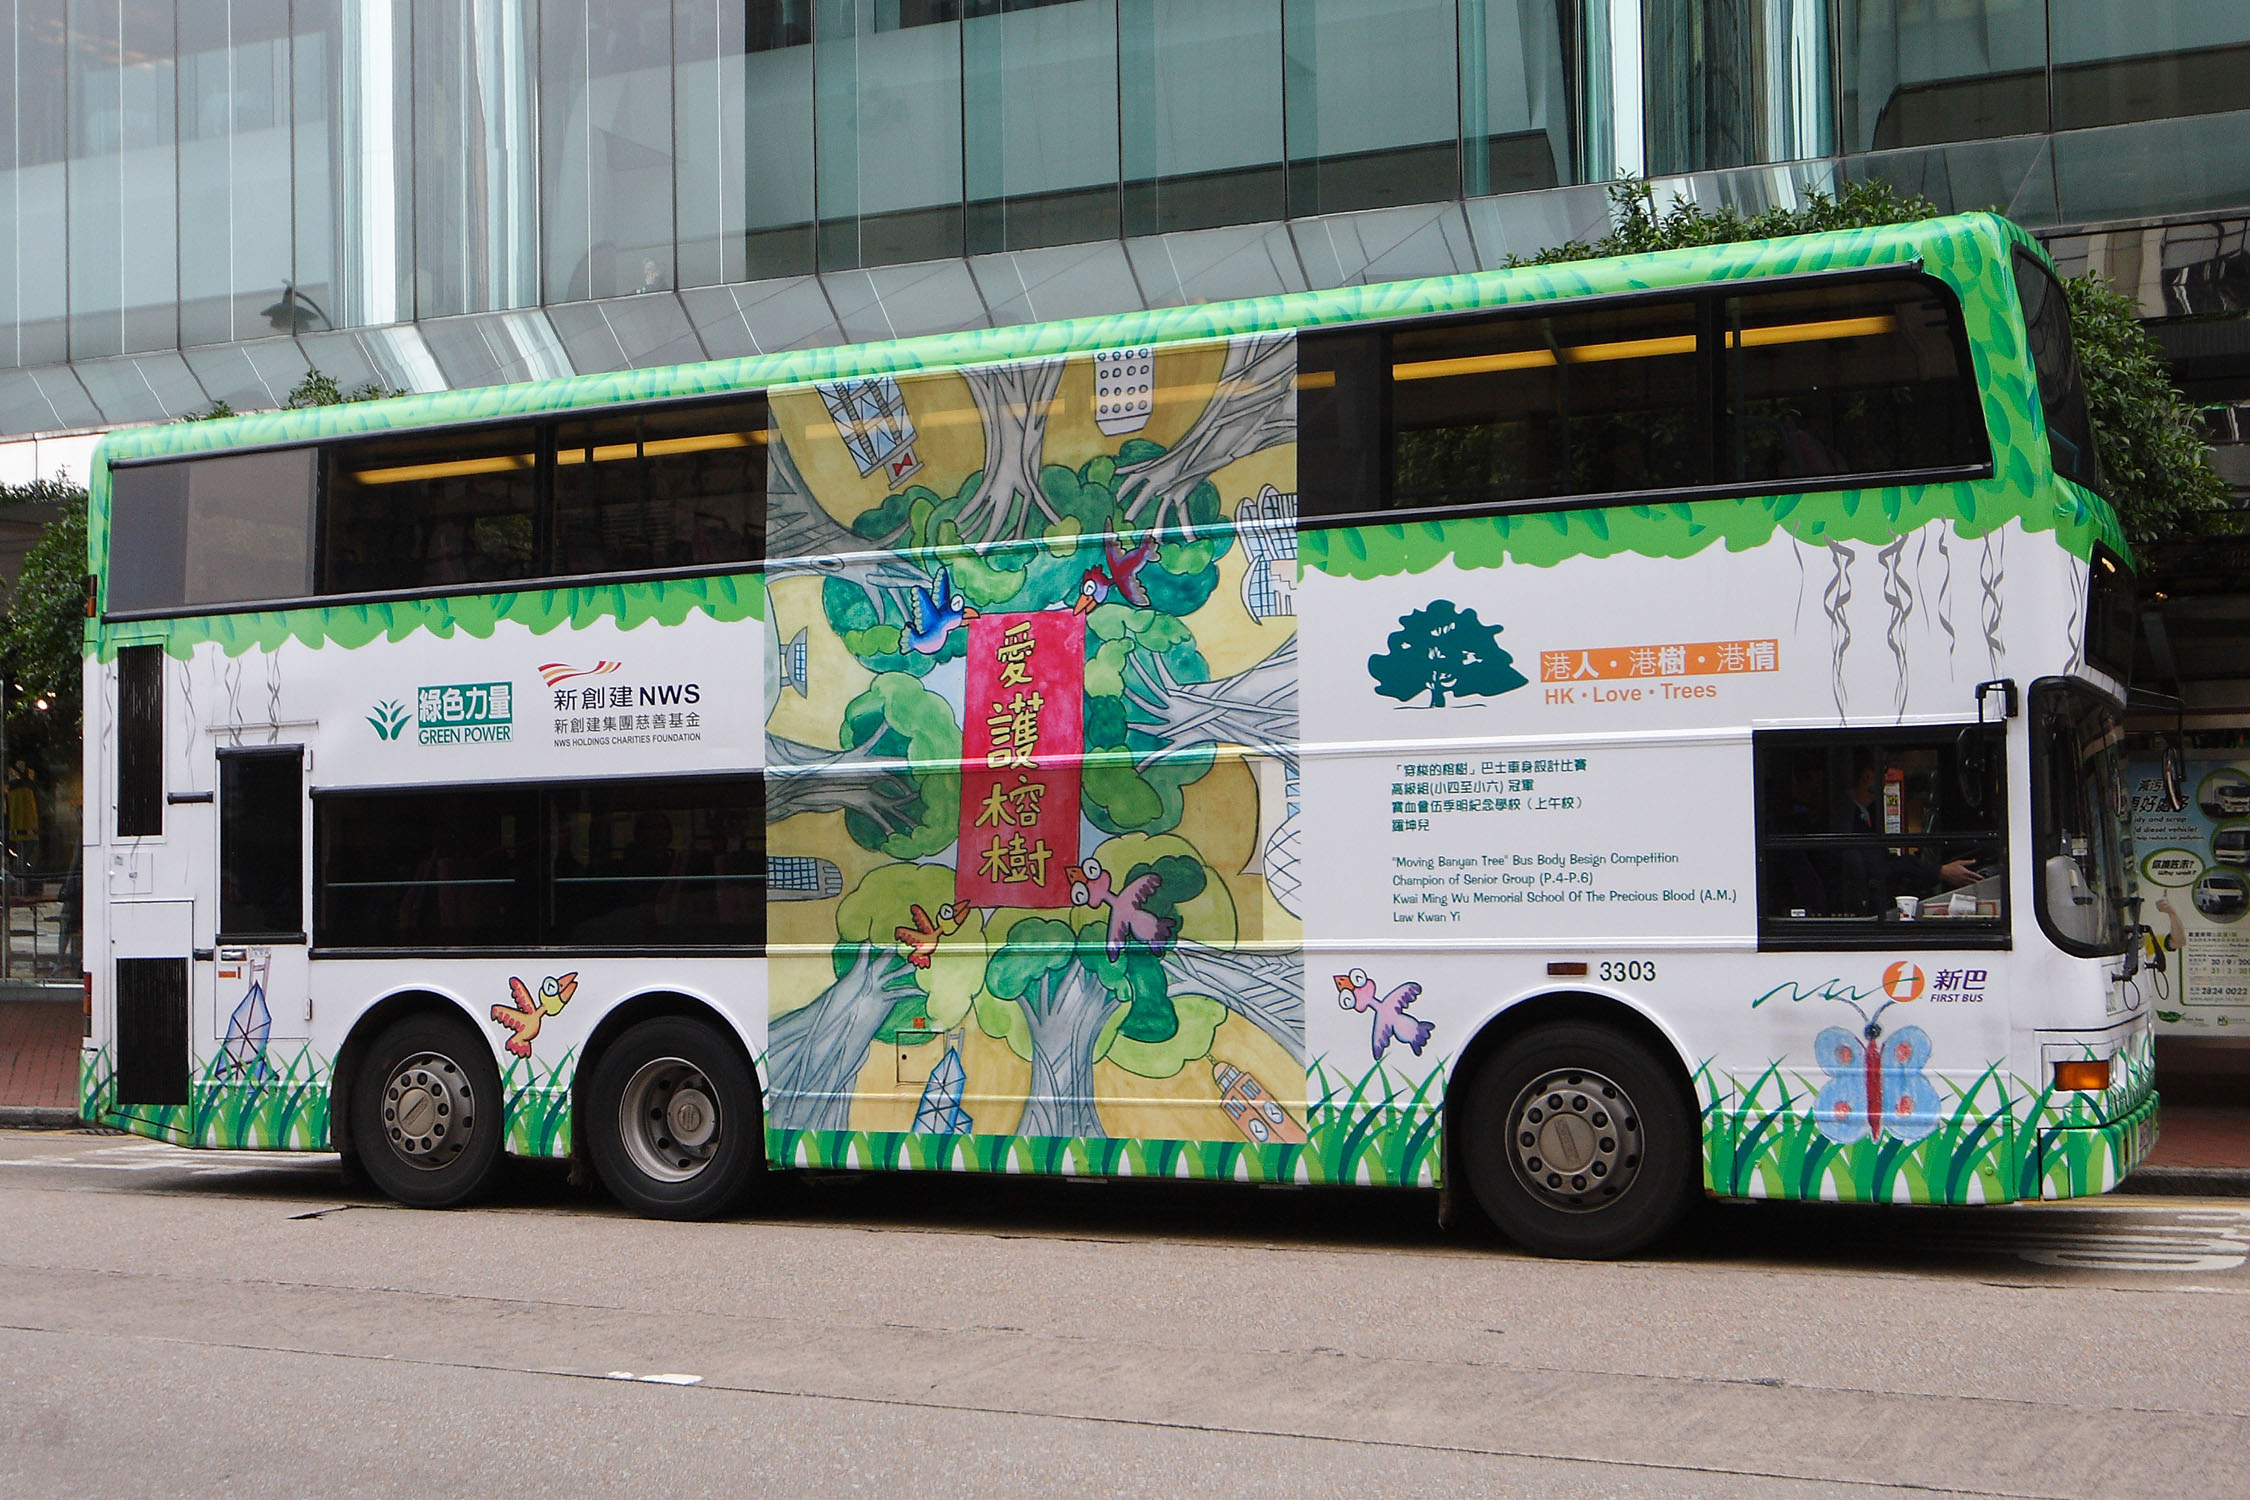 "HK‧Love‧Trees" launches 10 "Moving Banyan" buses across Hong Kong